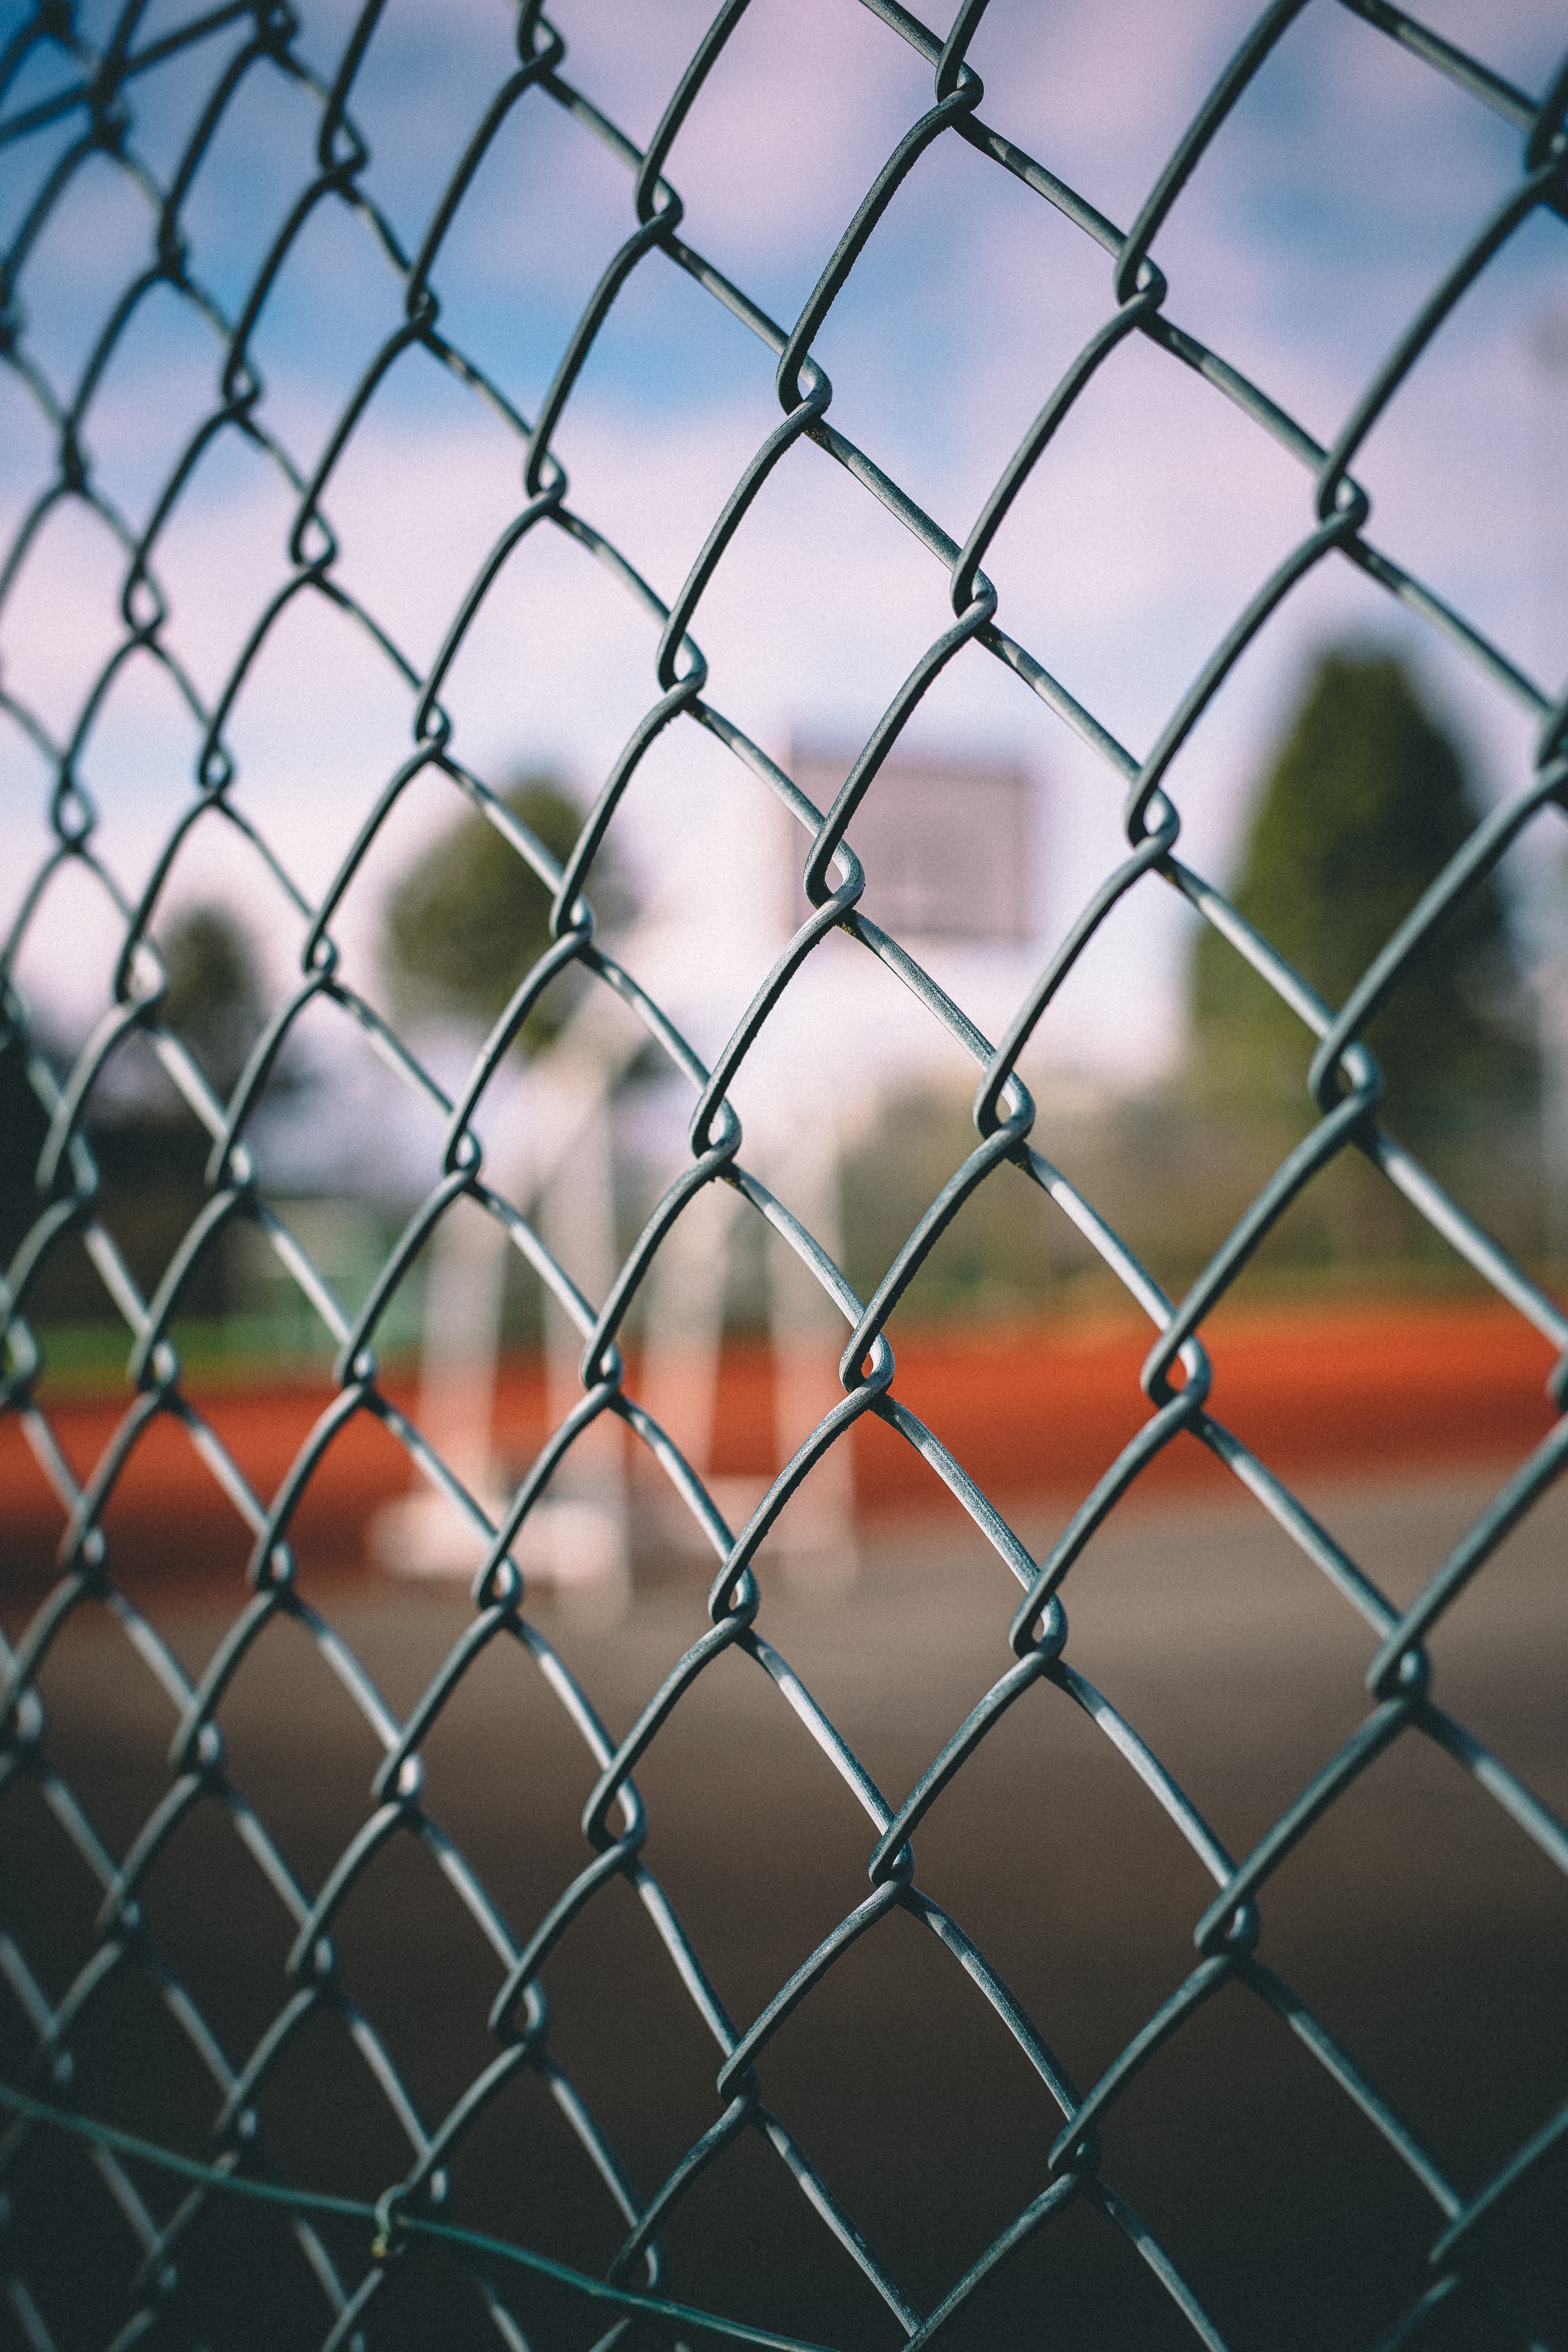 fence, miscellanea, miscellaneous, blur, smooth, grid, fencing, enclosure